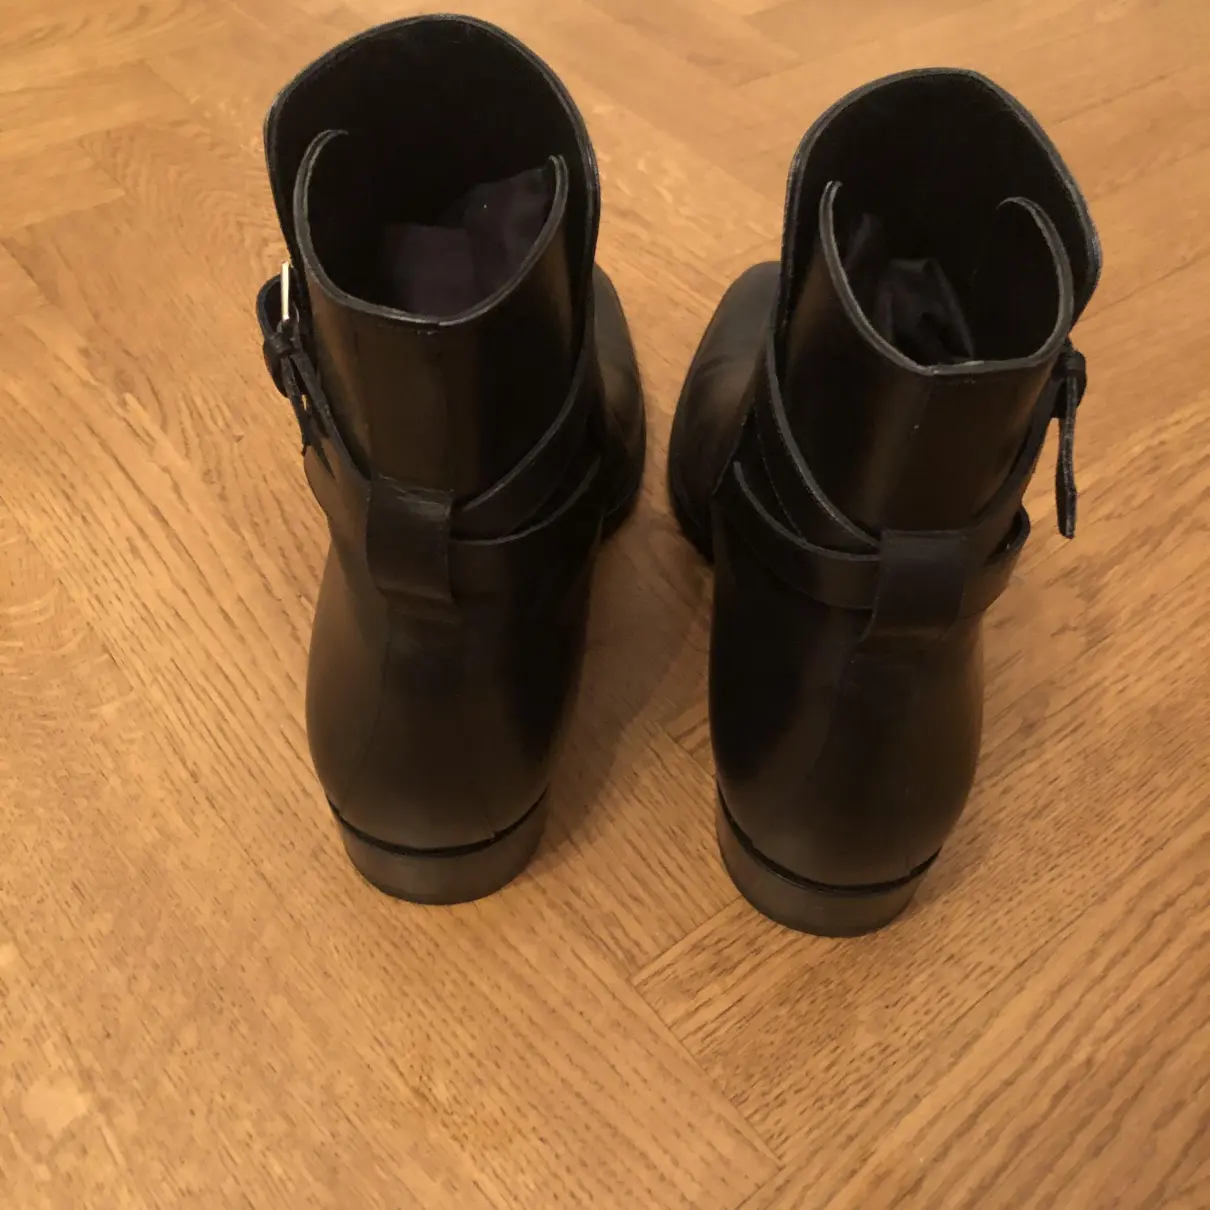 Wyatt leather boots Saint Laurent